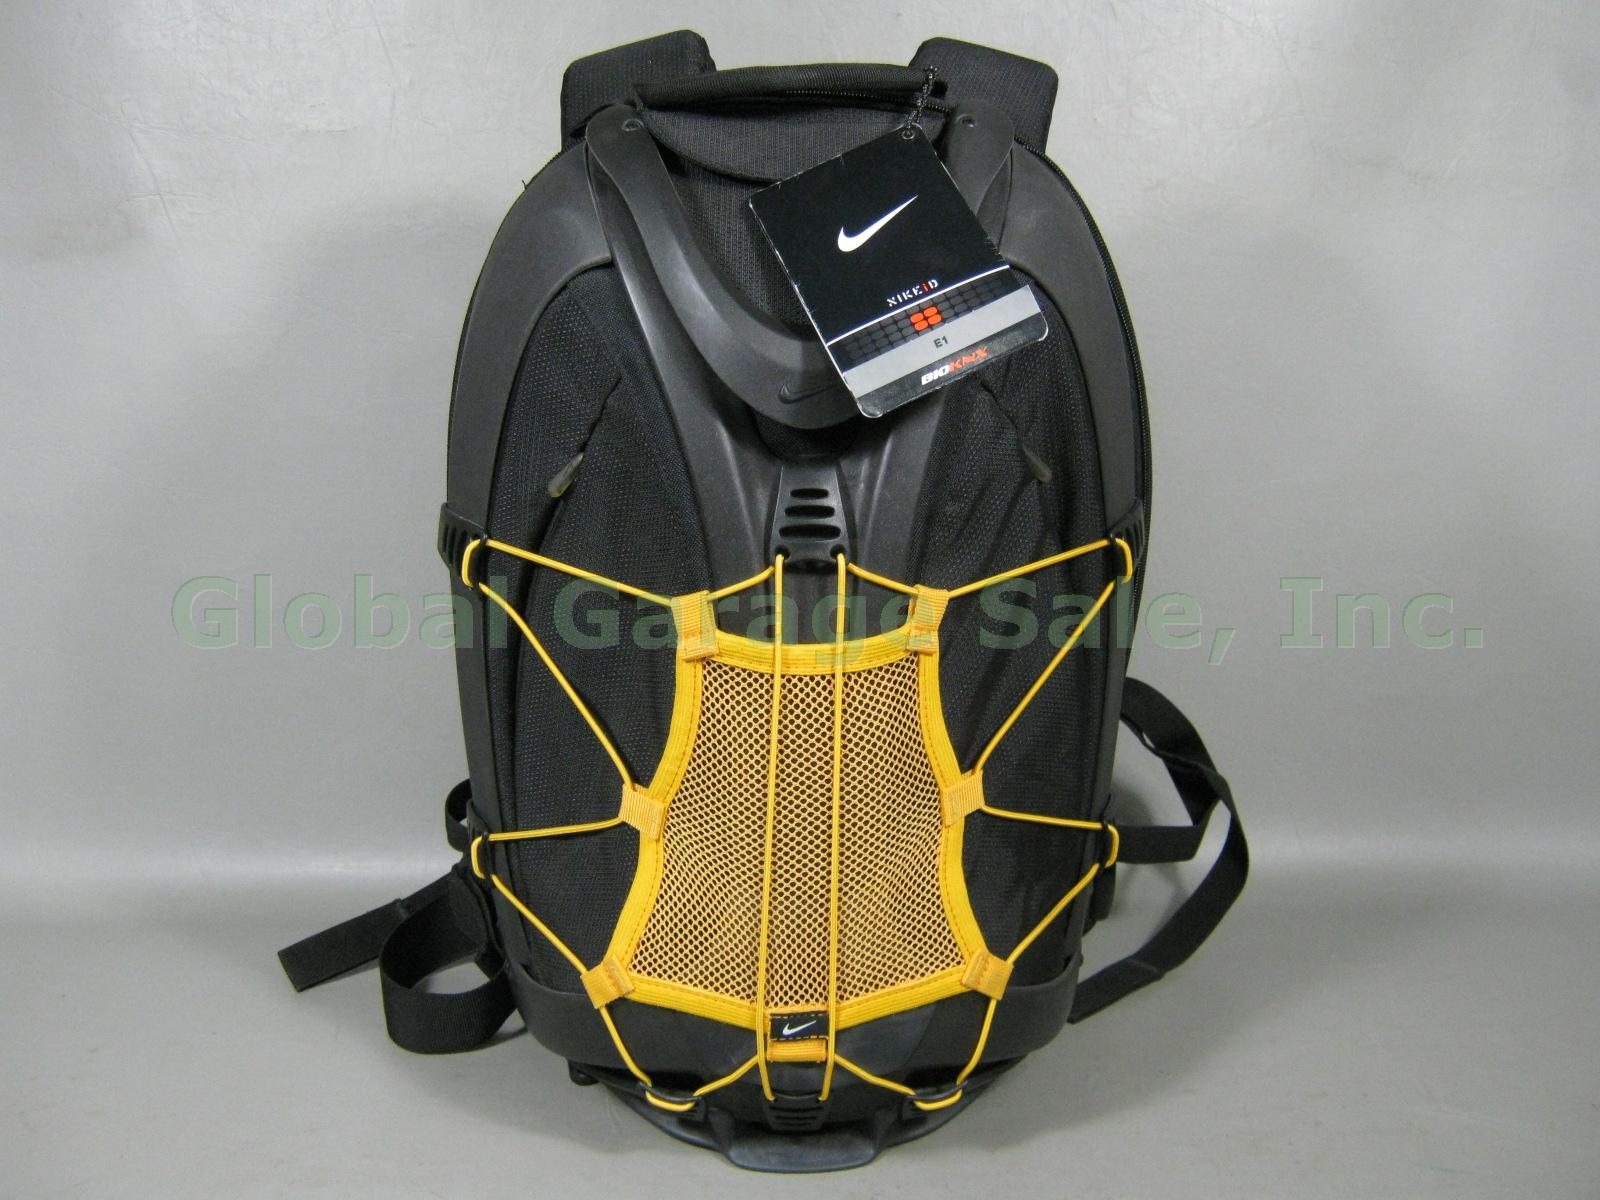 NOS New Old Stock Nike Epic E1 BioKNX Backpack With Tags Exoskeleton Hardshell